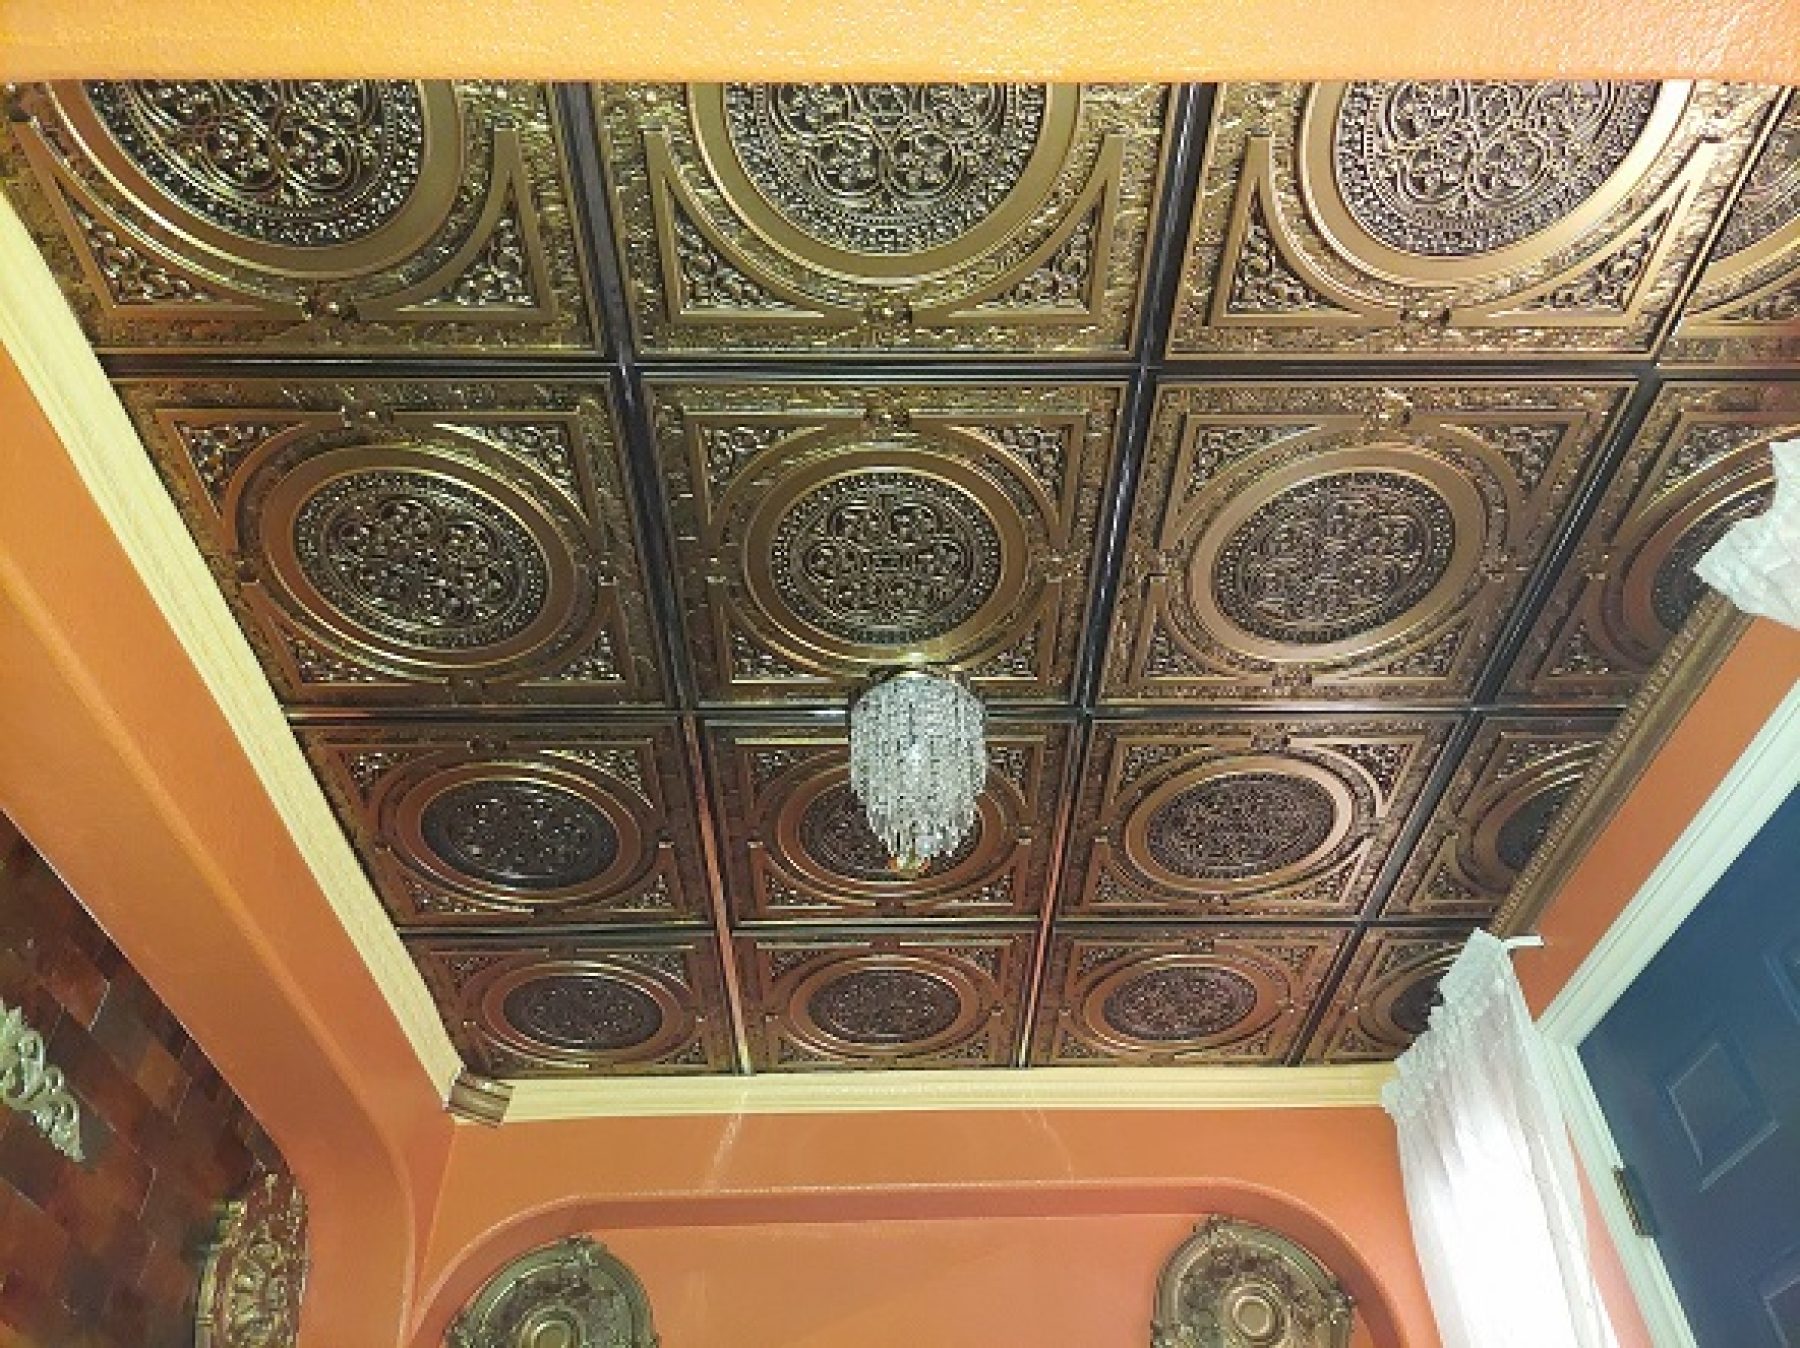 house entry ceiling tile